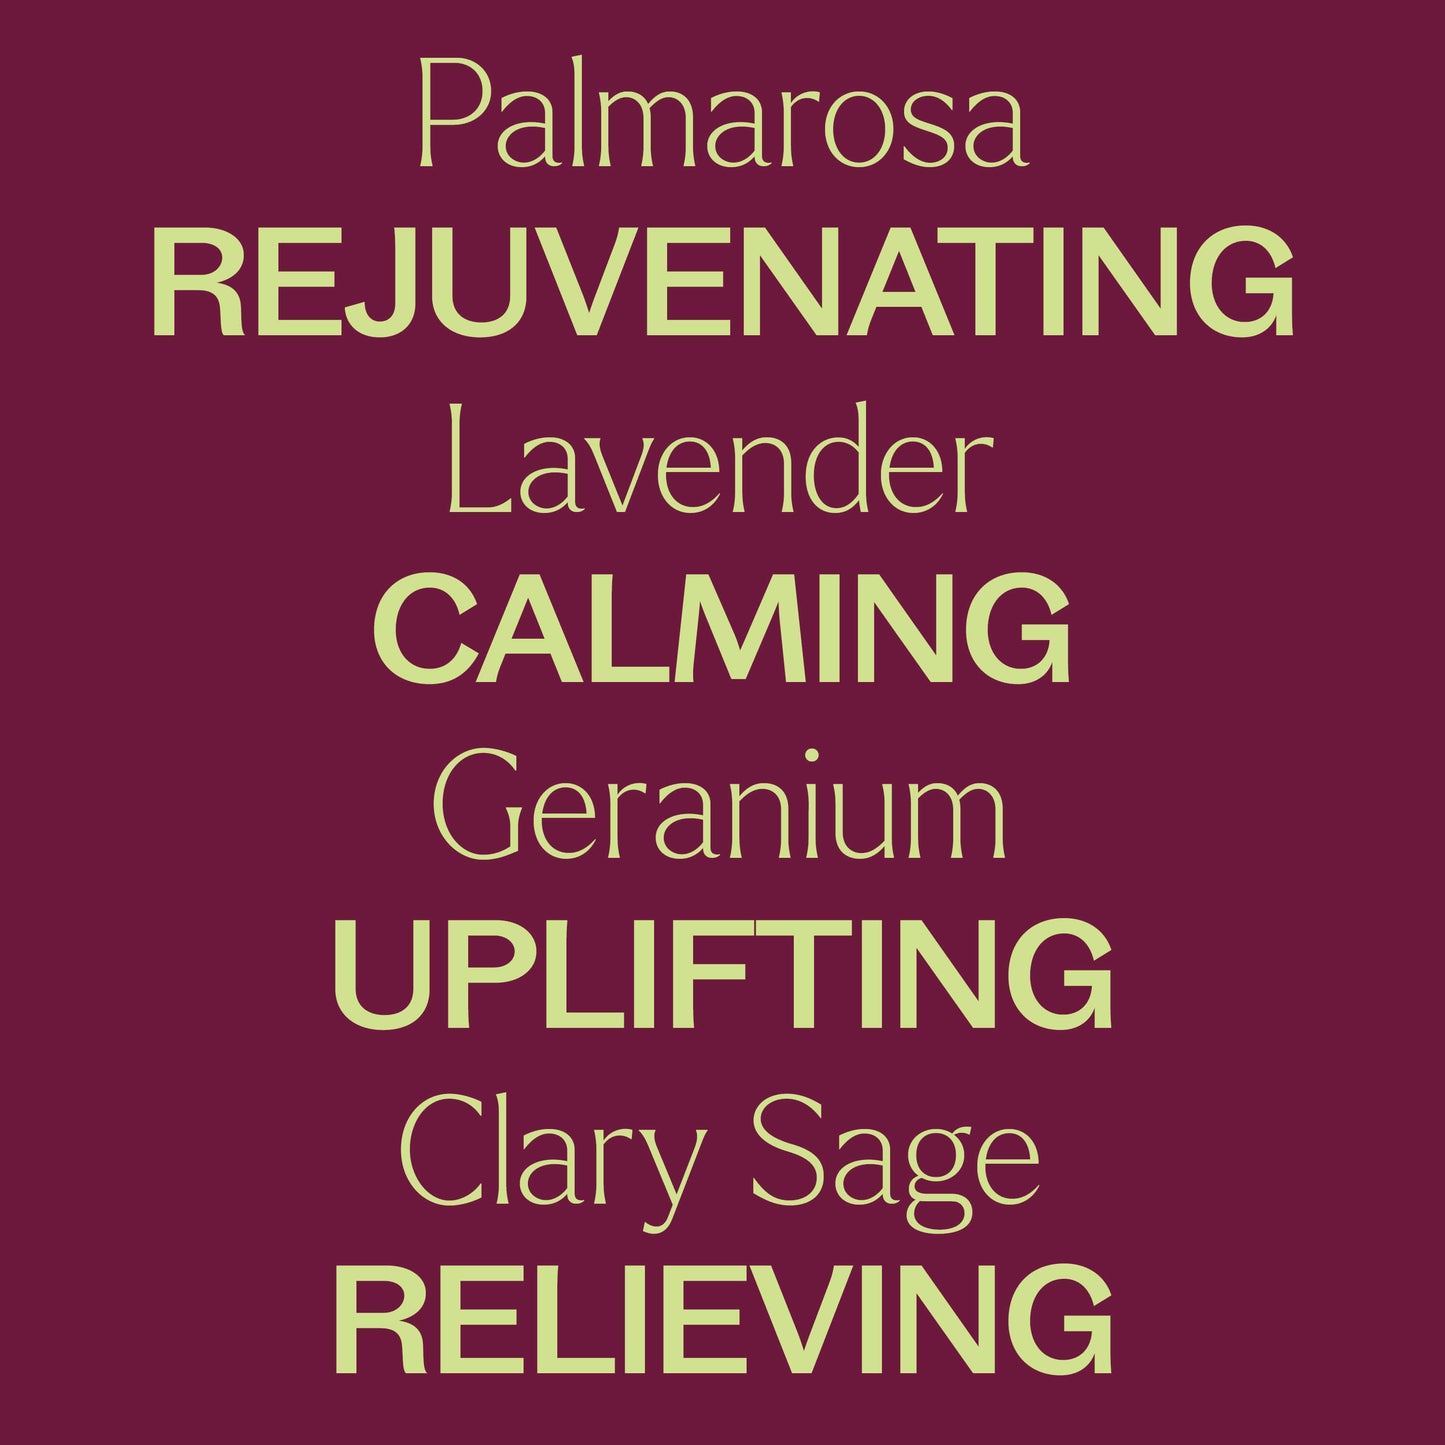 Palmarosa rejuvenating, lavender calming, geranium uplifting, clary sage relieving